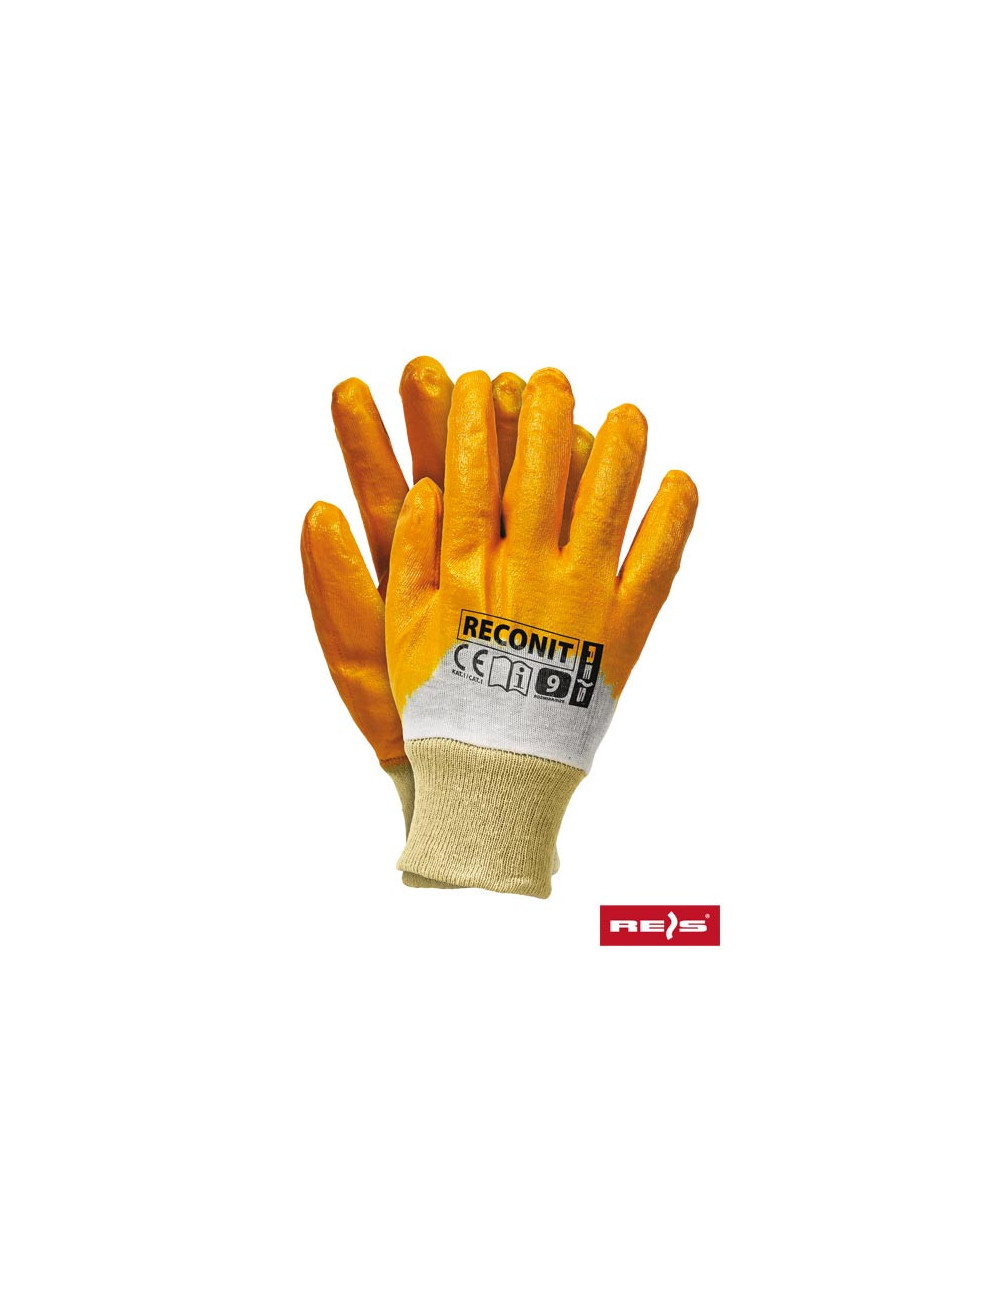 Protective gloves reconit bep beige-orange Reis